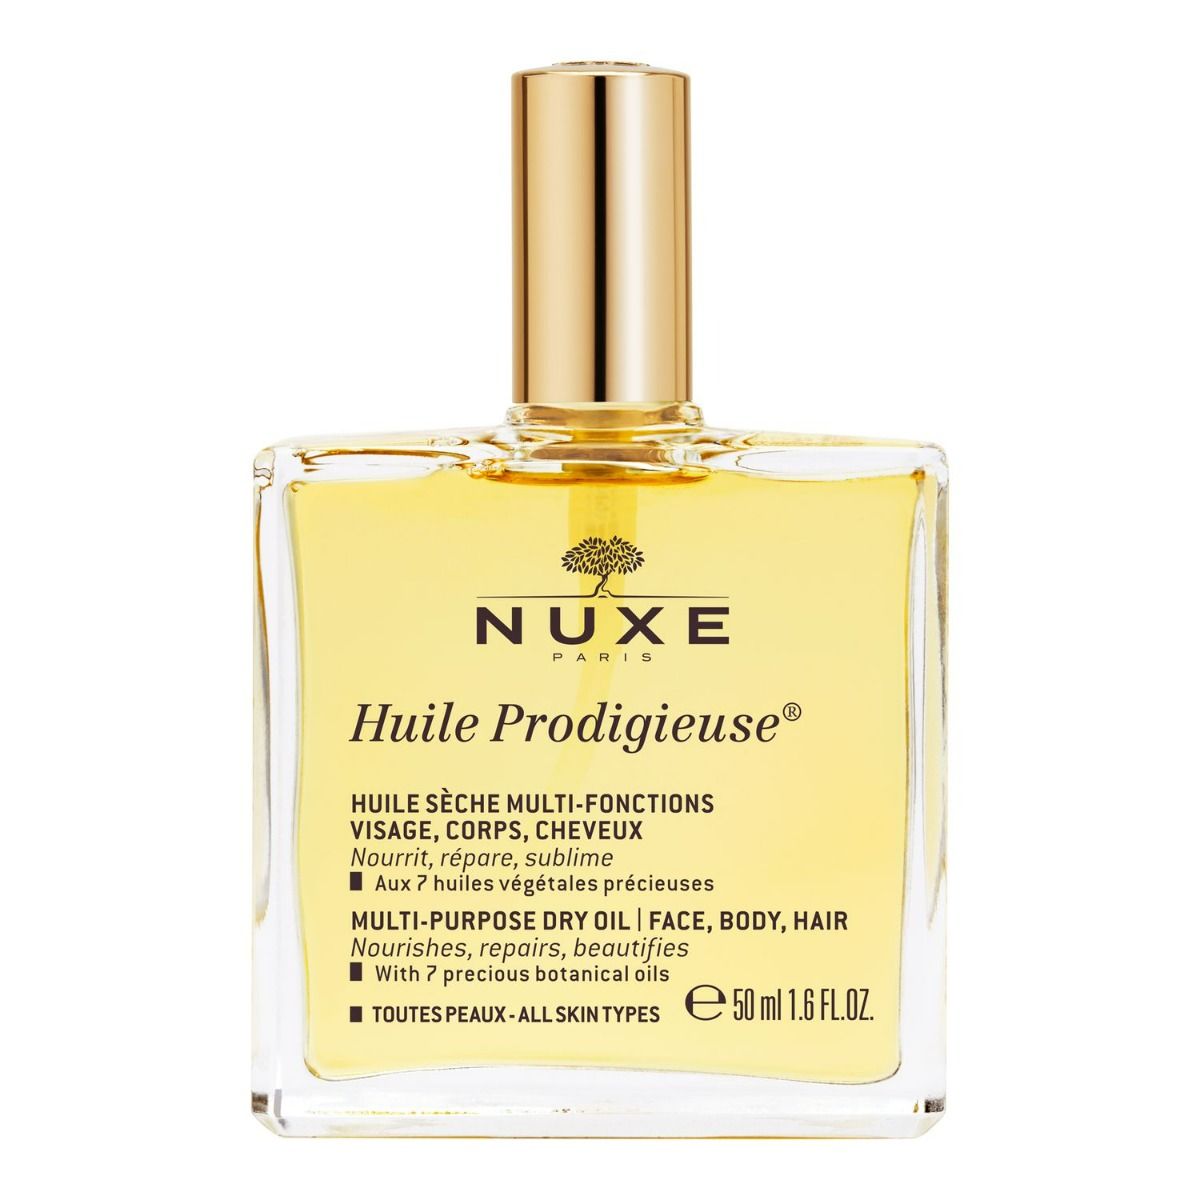 Nuxe Huile Prodigieuse масло для лица, тела и волос, 50 ml nuxe масло huile prodigieuse florale цветочное сухое 50 мл